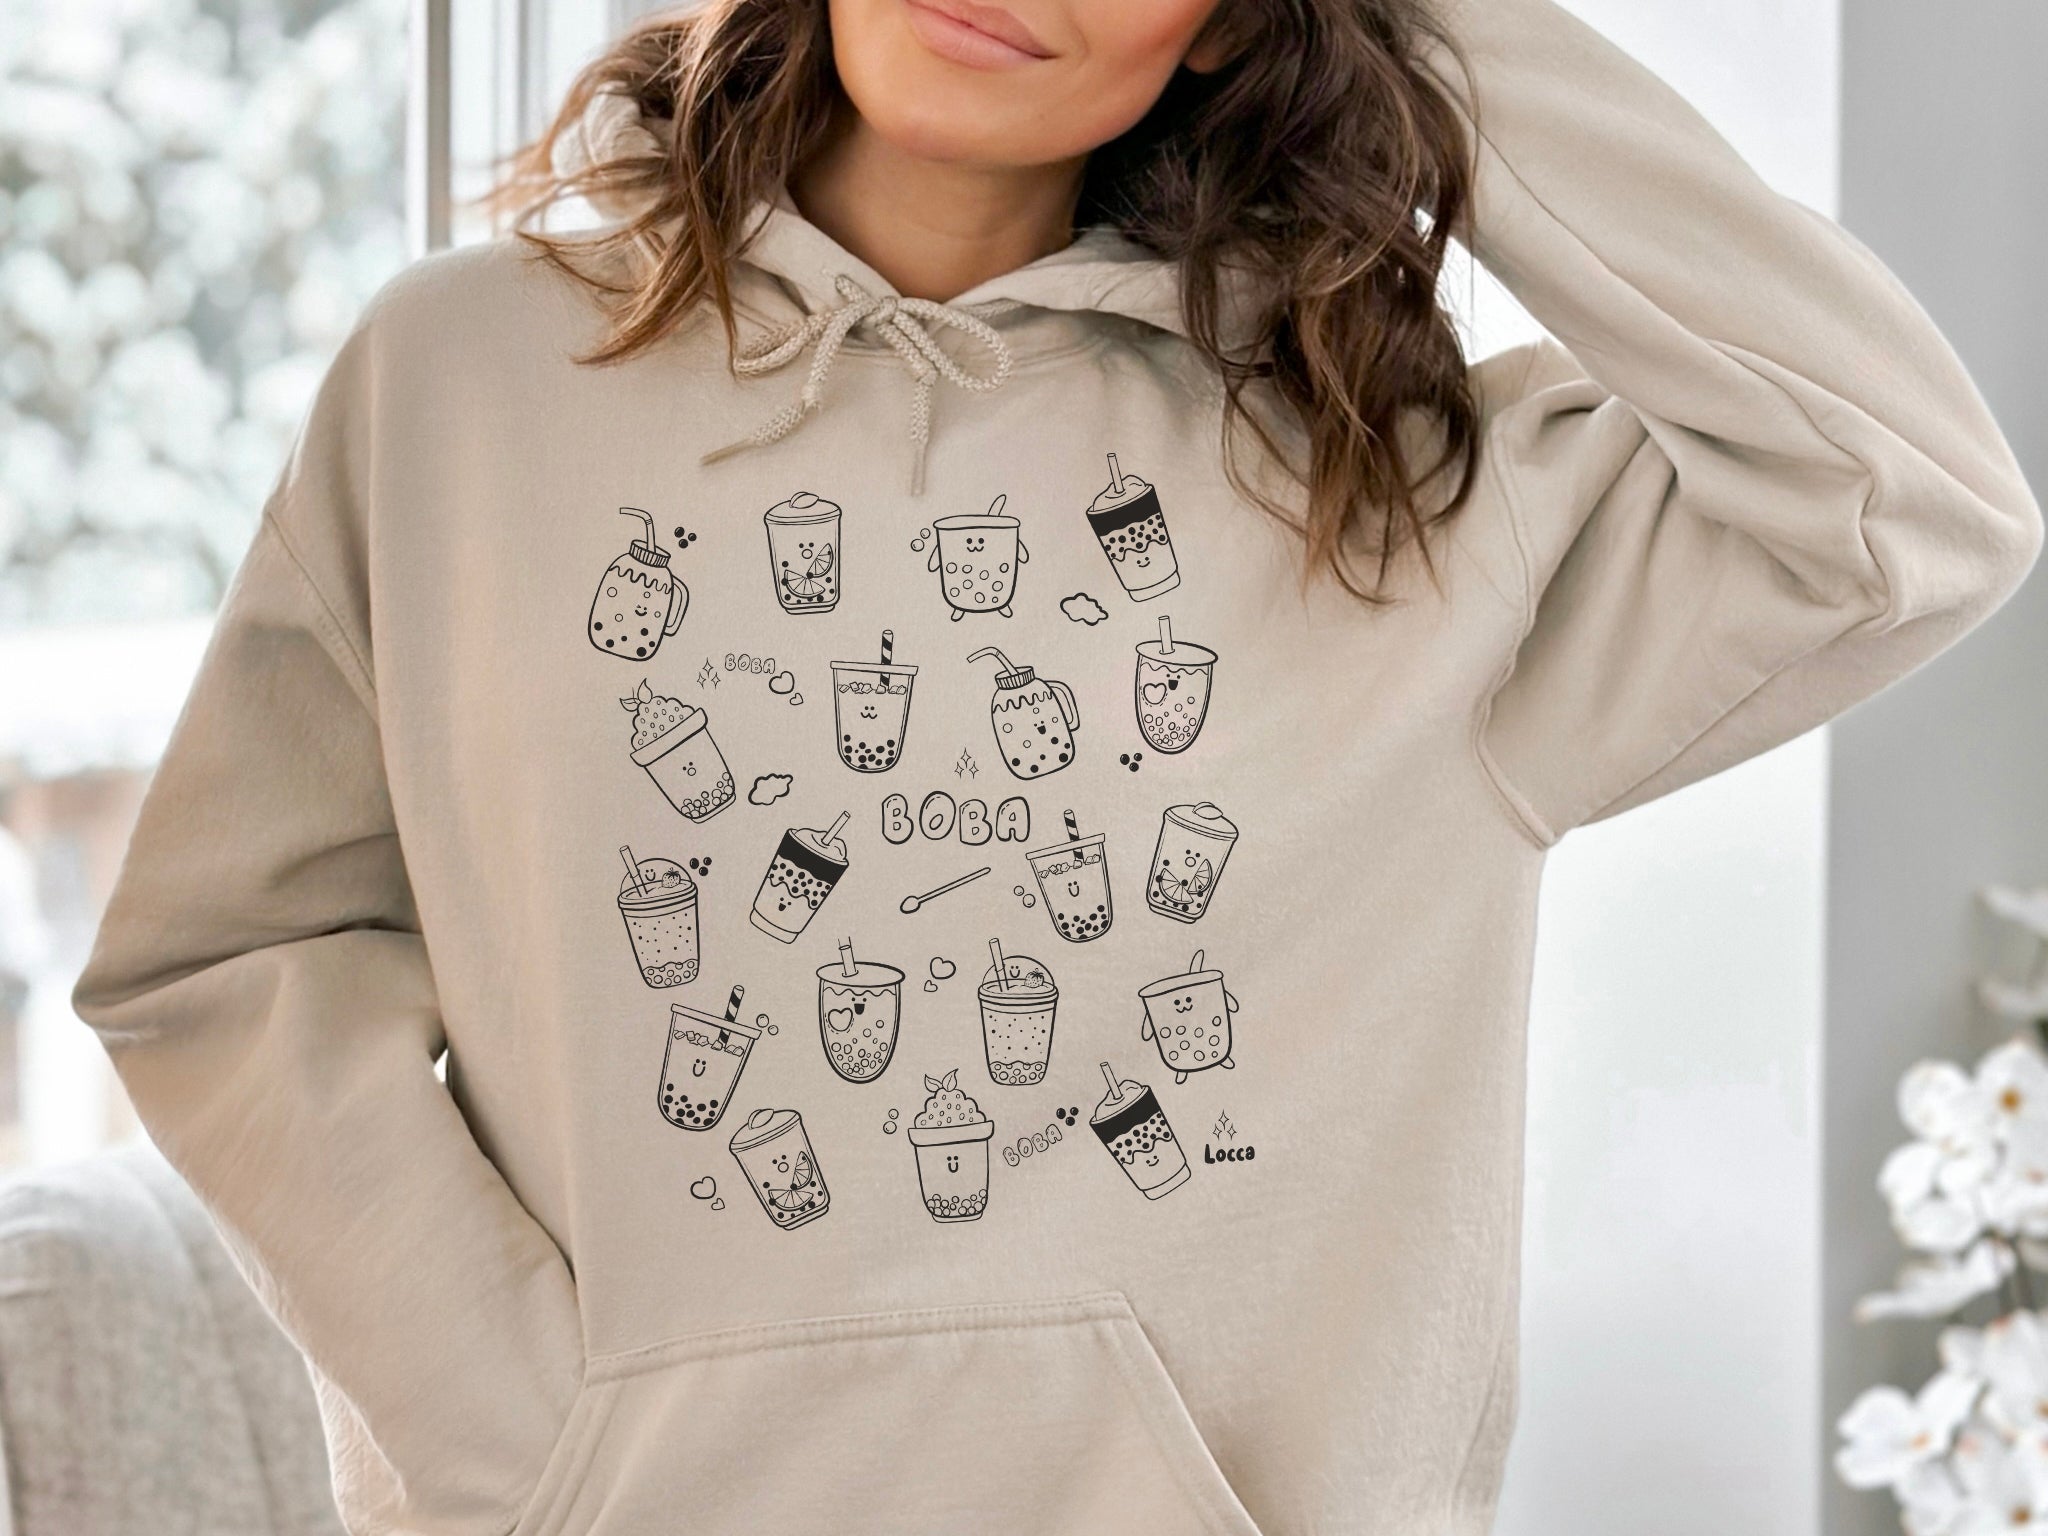 Boba Tea Hoodie - Doodle Art Unique Hoodie Sweatshirt - Milk Tea Lover Gift for Her Gifts Holiday Sweatshirt Hoodie